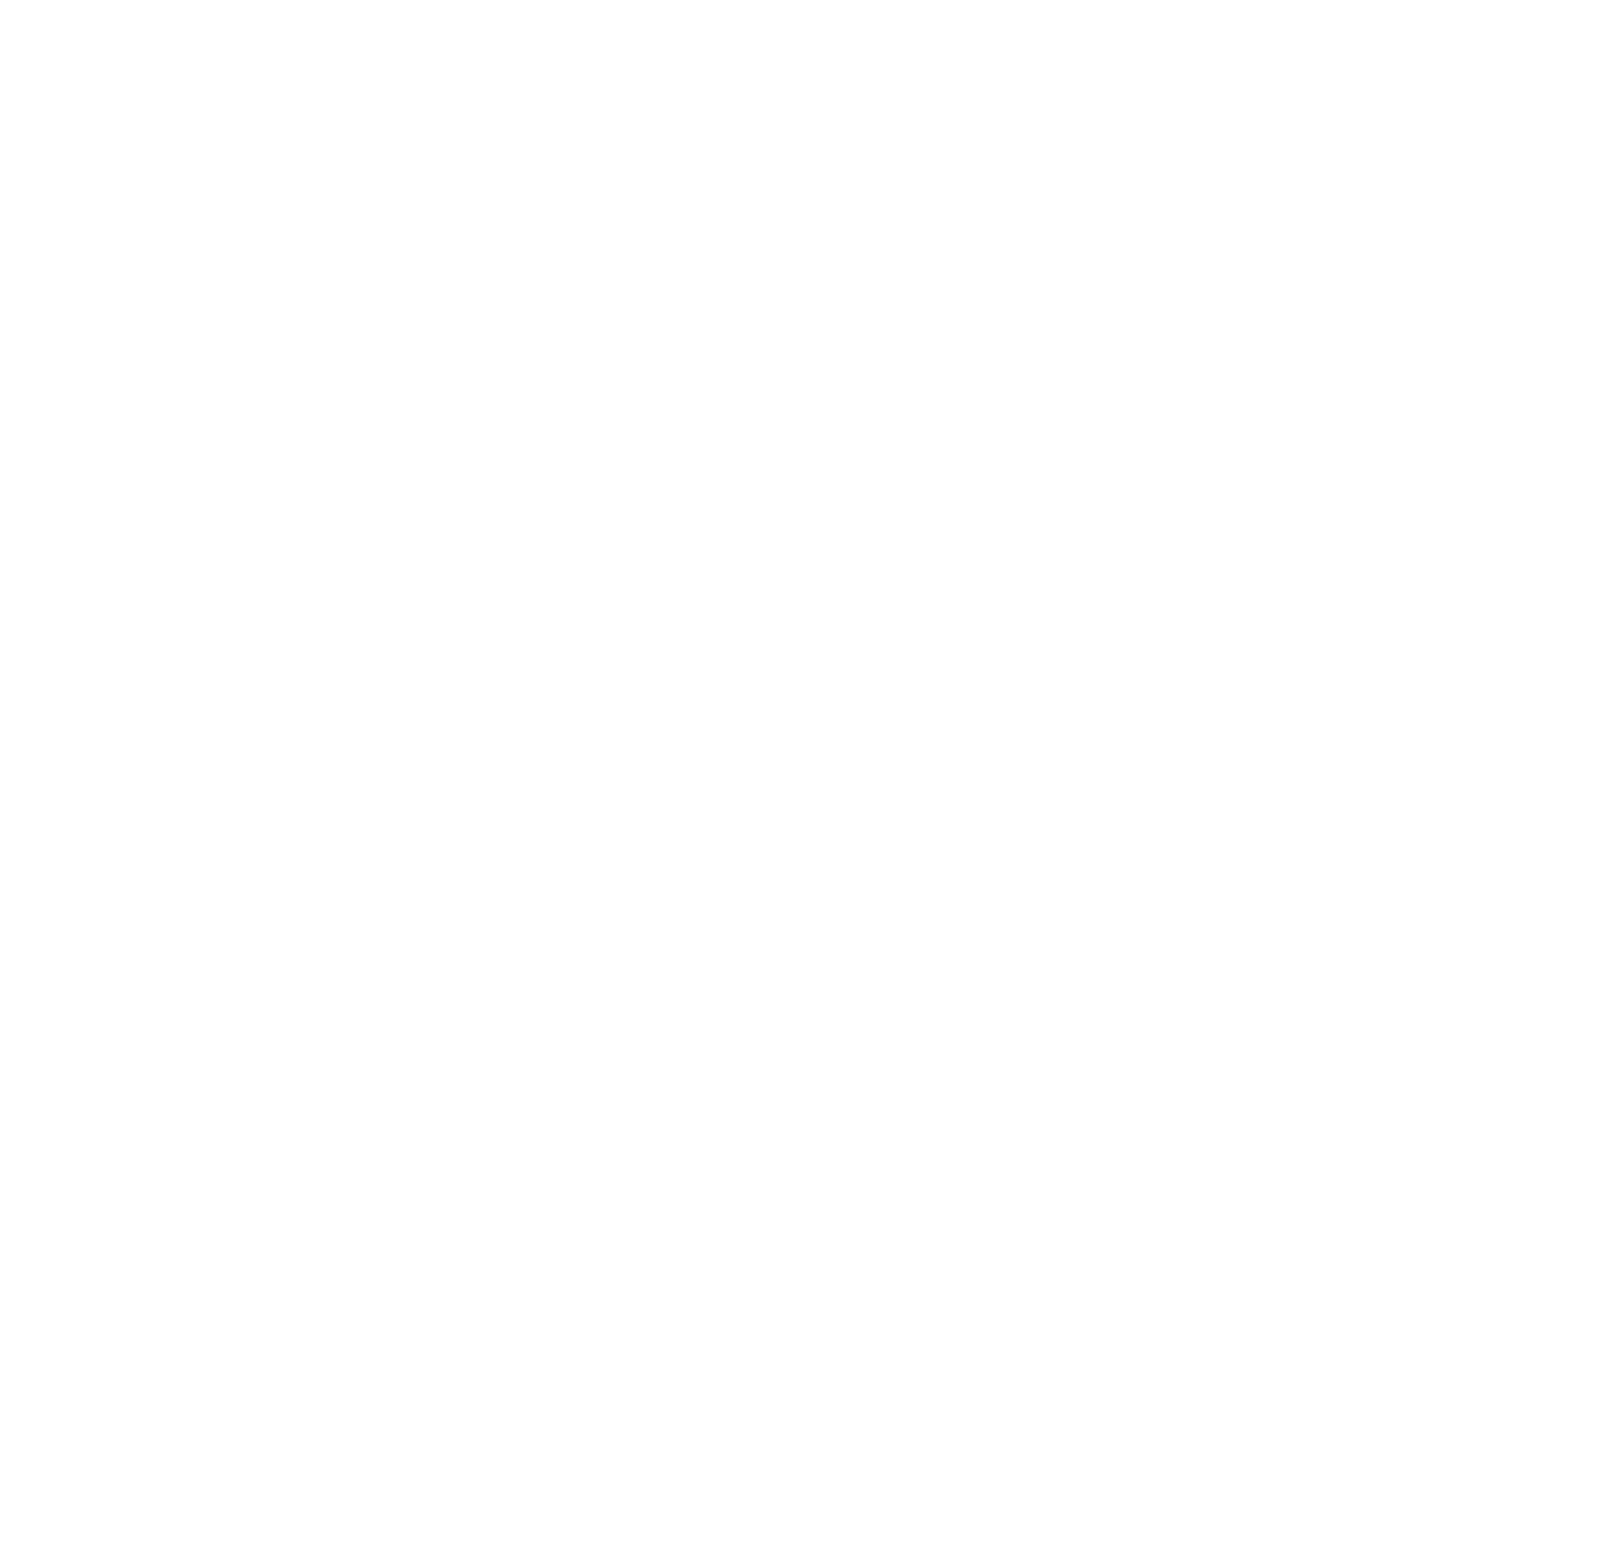 Social Justice Aotearoa